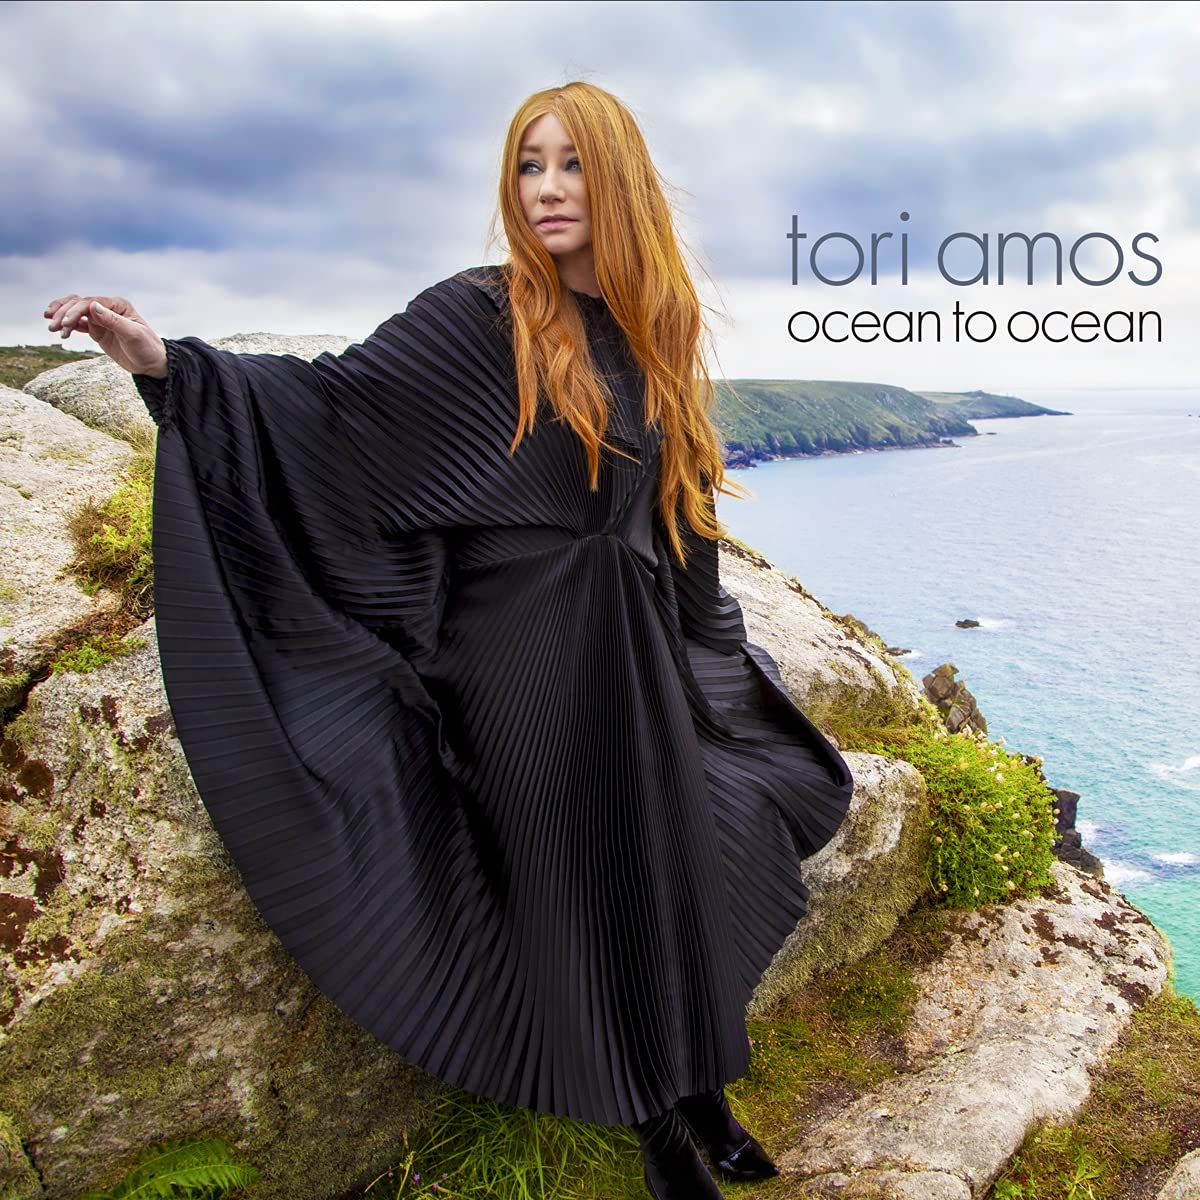 Tori Amos – Ocean to ocean (pop)